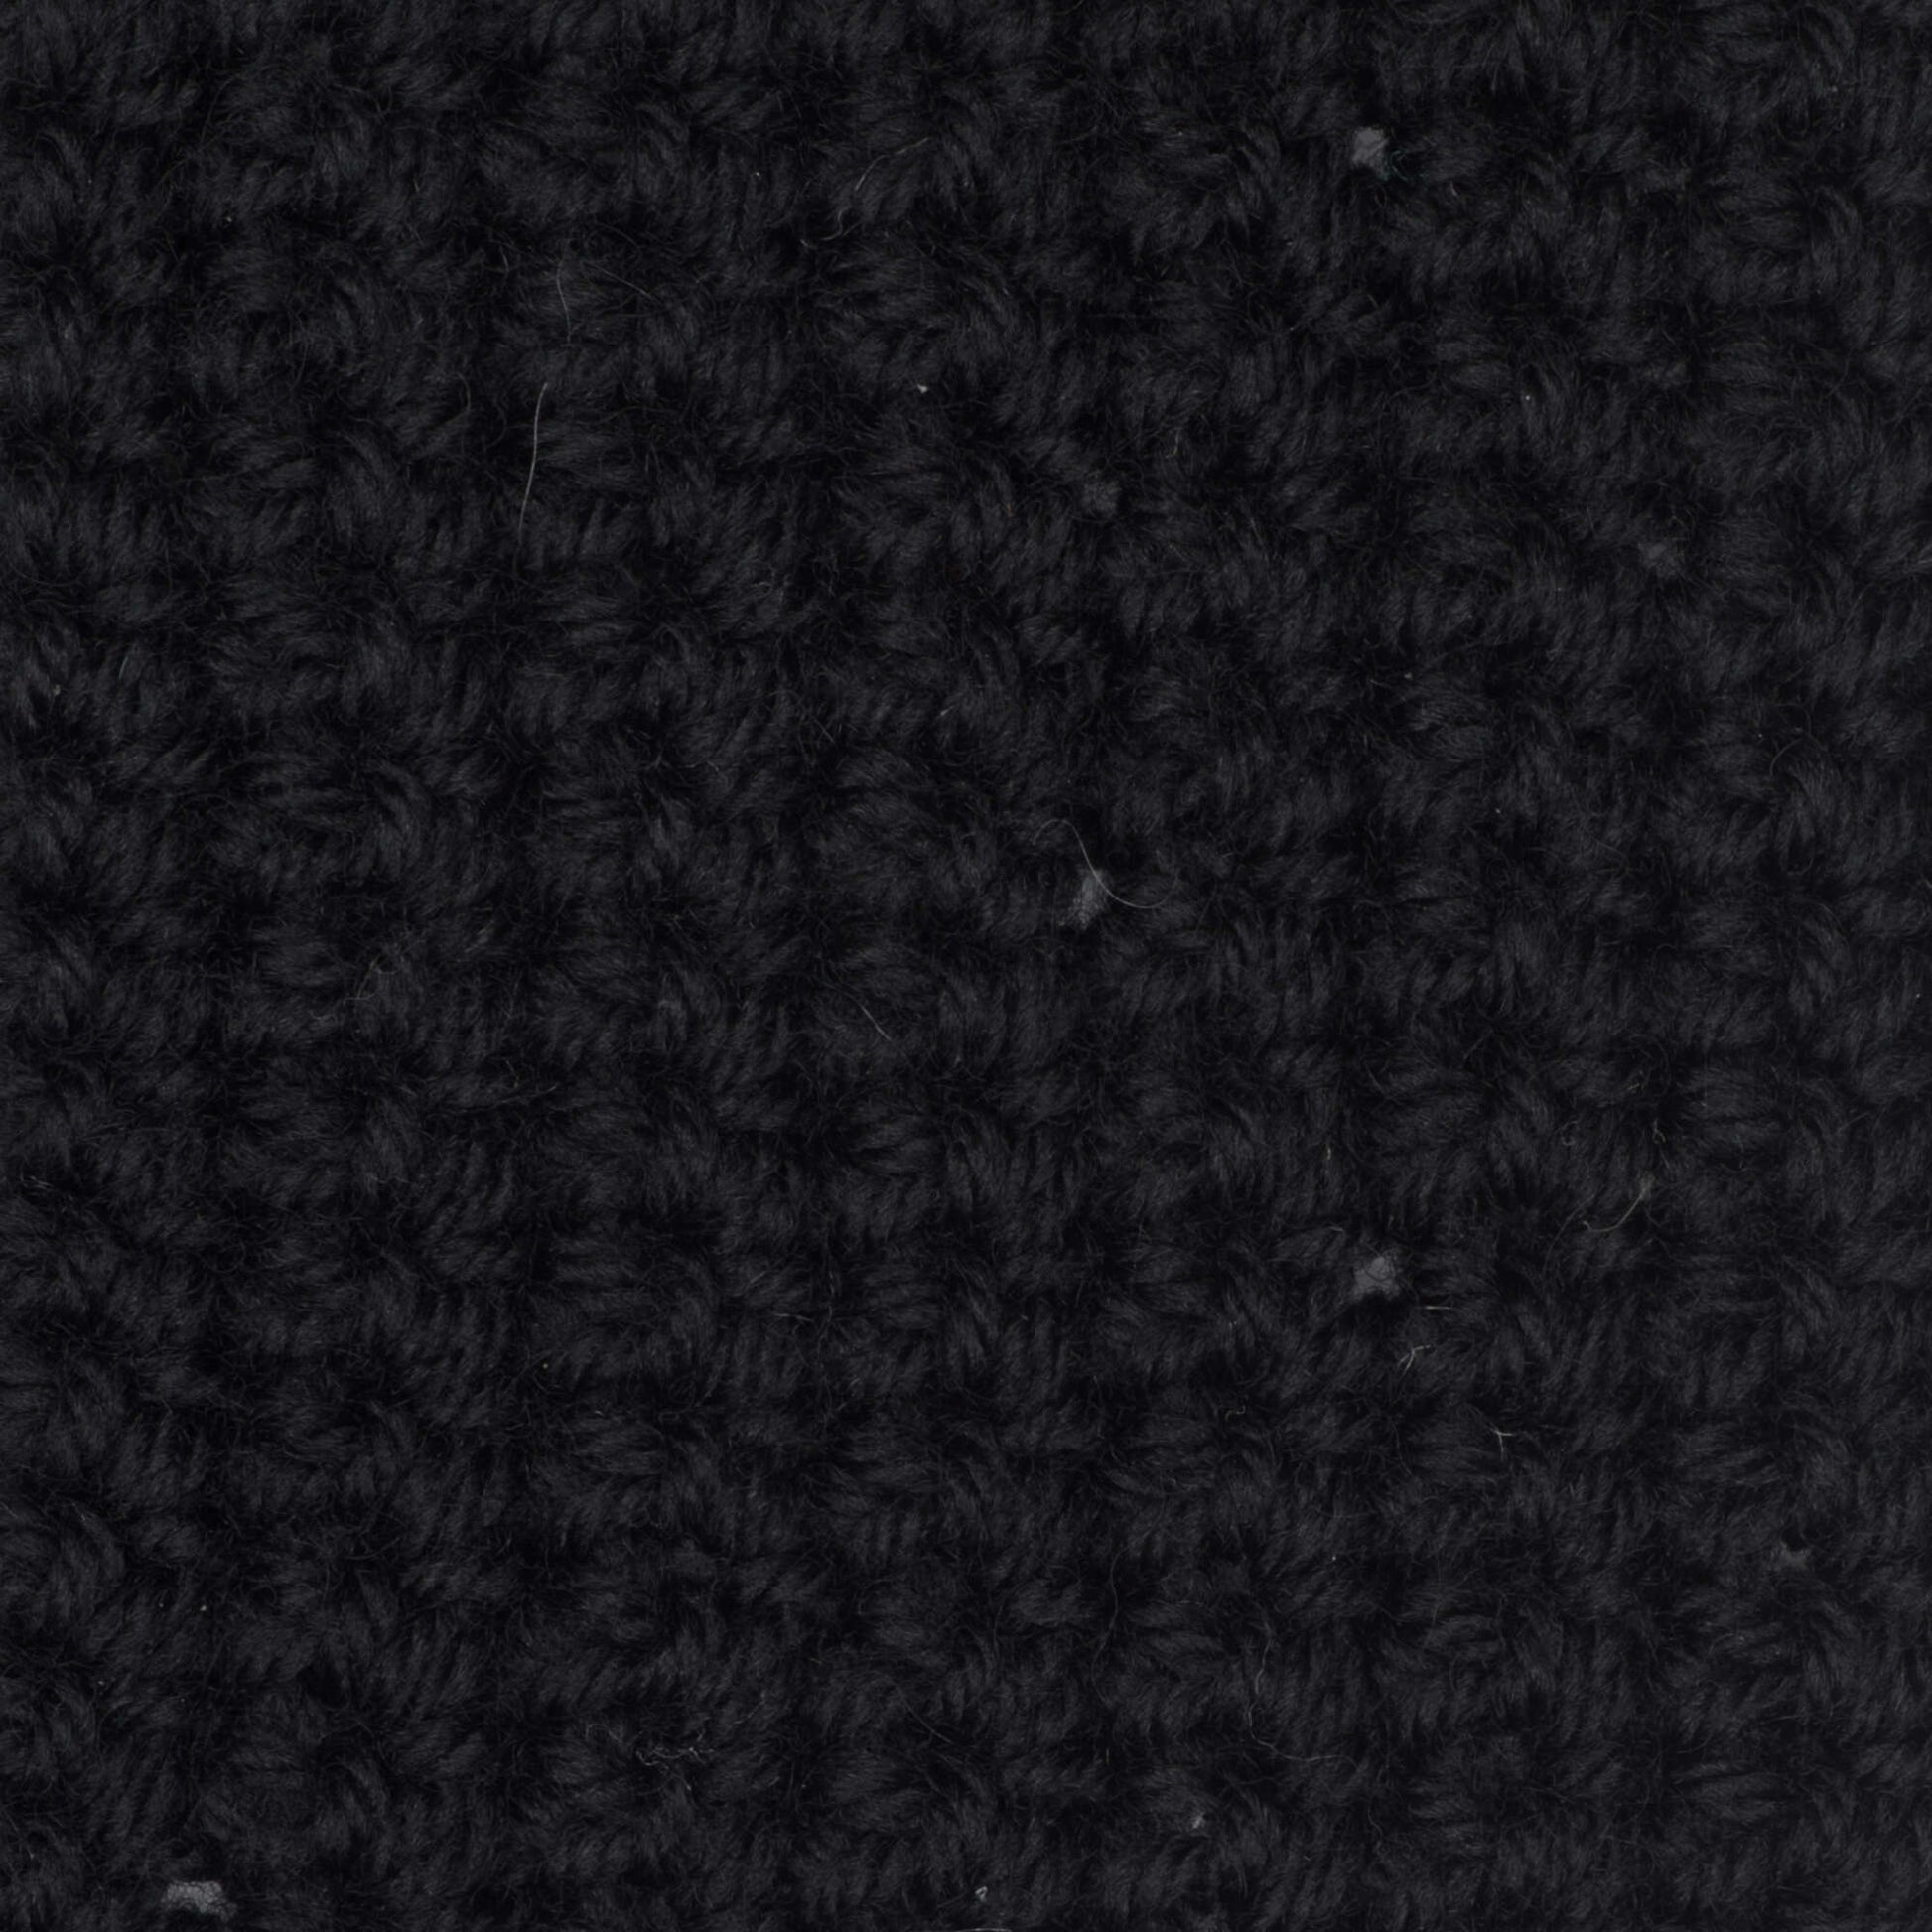 Patons Classic Wool DK Superwash Yarn - Discontinued Shades Black